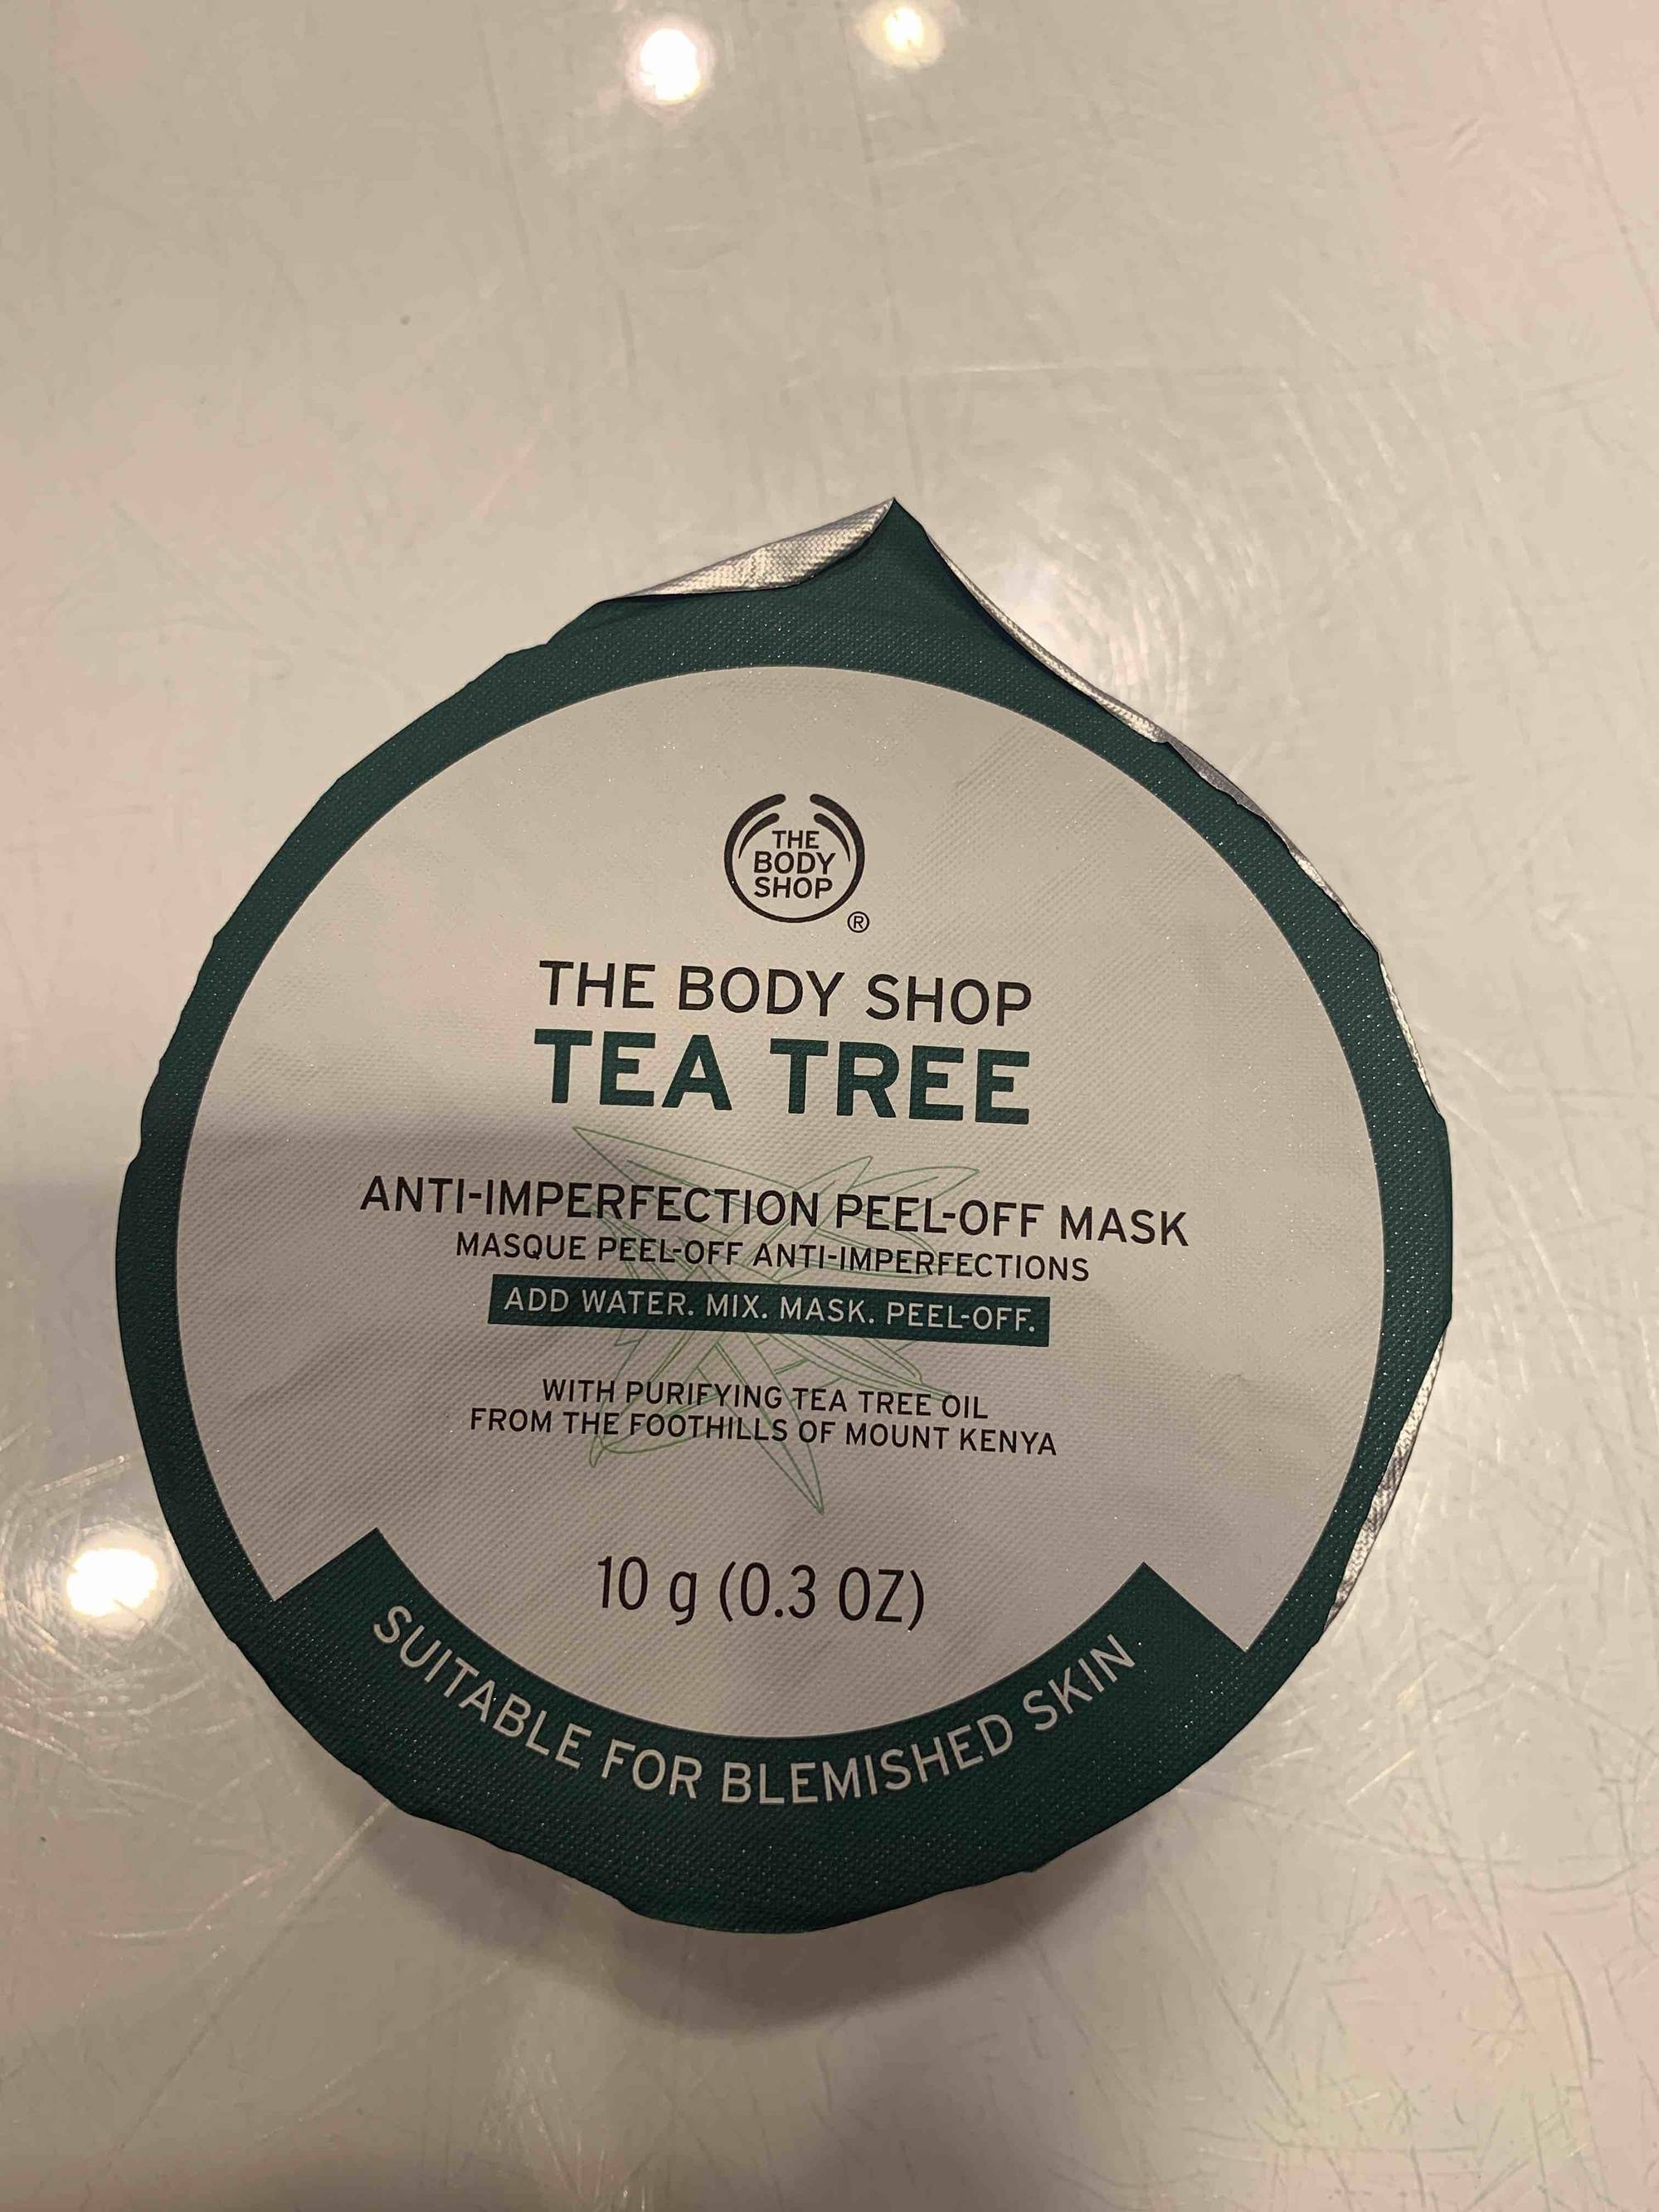 THE BODY SHOP - Tea tree - Masque peel-off anti-imperfections